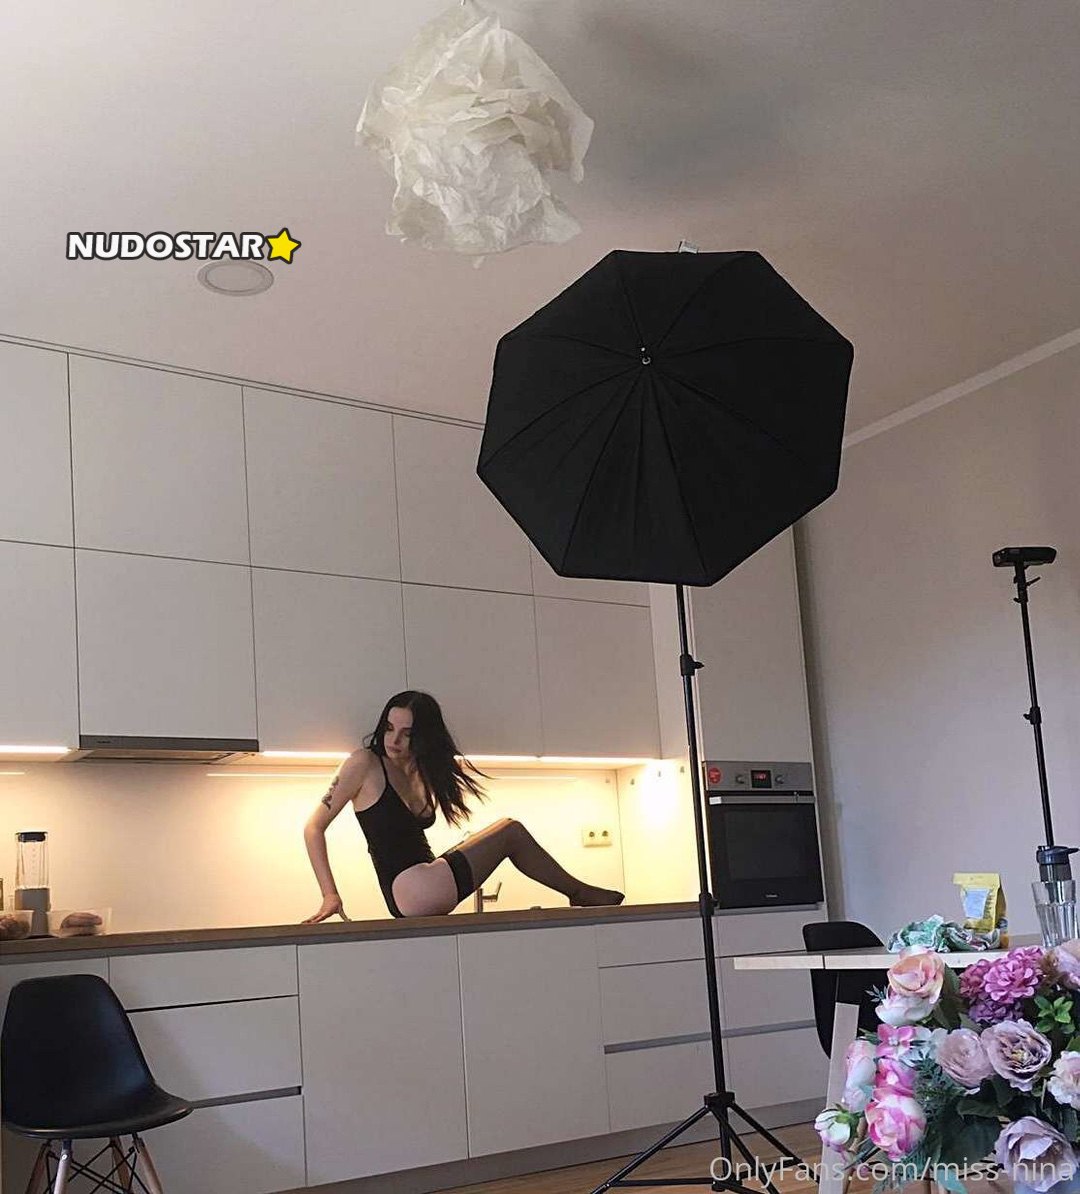 miss-nina Onlyfans Nudes Leaks (400 photos + 6 videos)